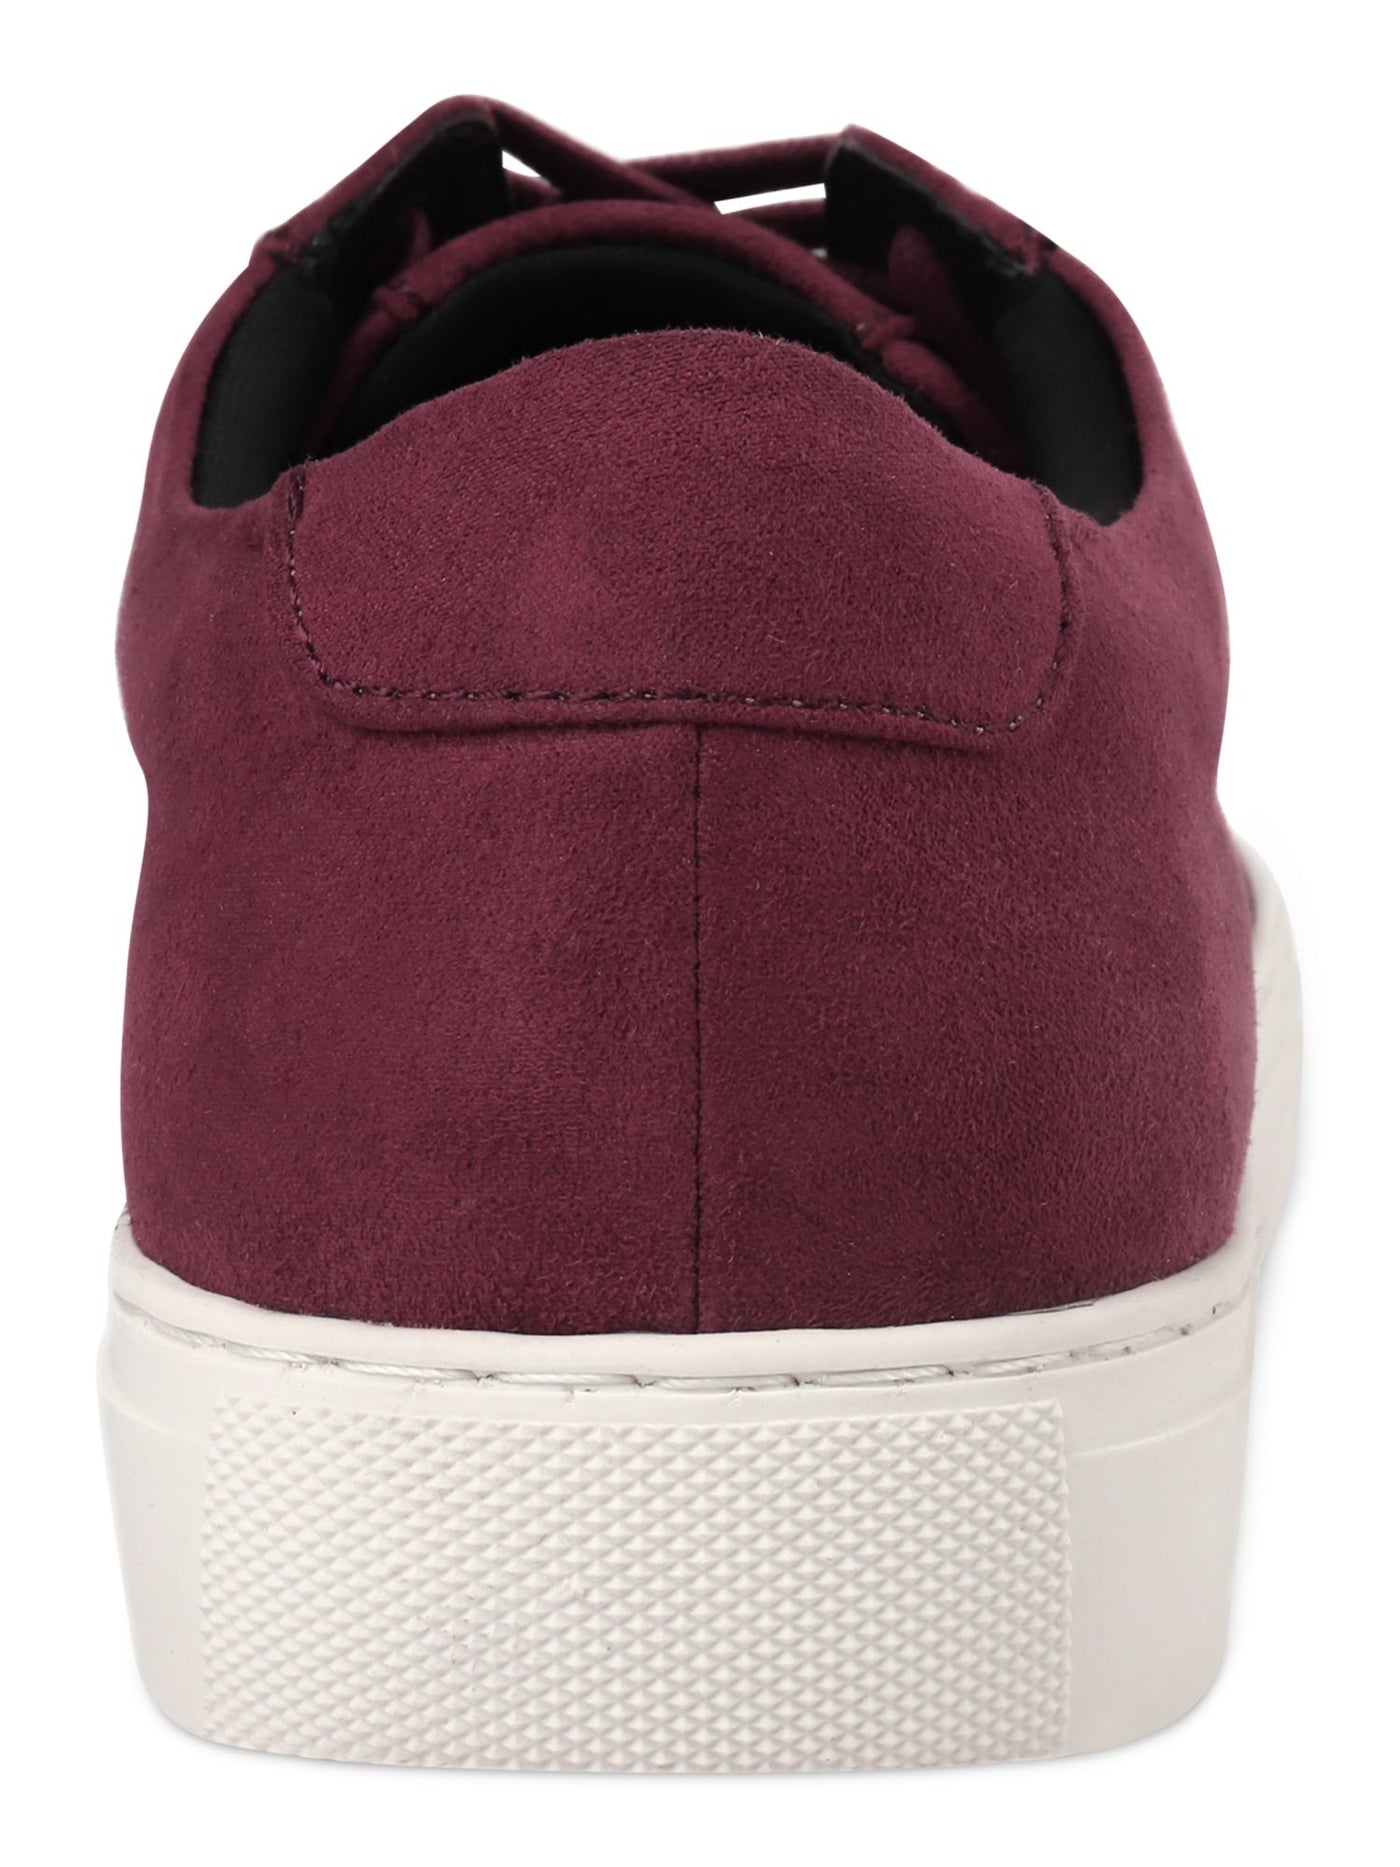 ALFANI Mens Burgundy Comfort Grayson Round Toe Platform Lace-Up Athletic Sneakers Shoes 8.5 M